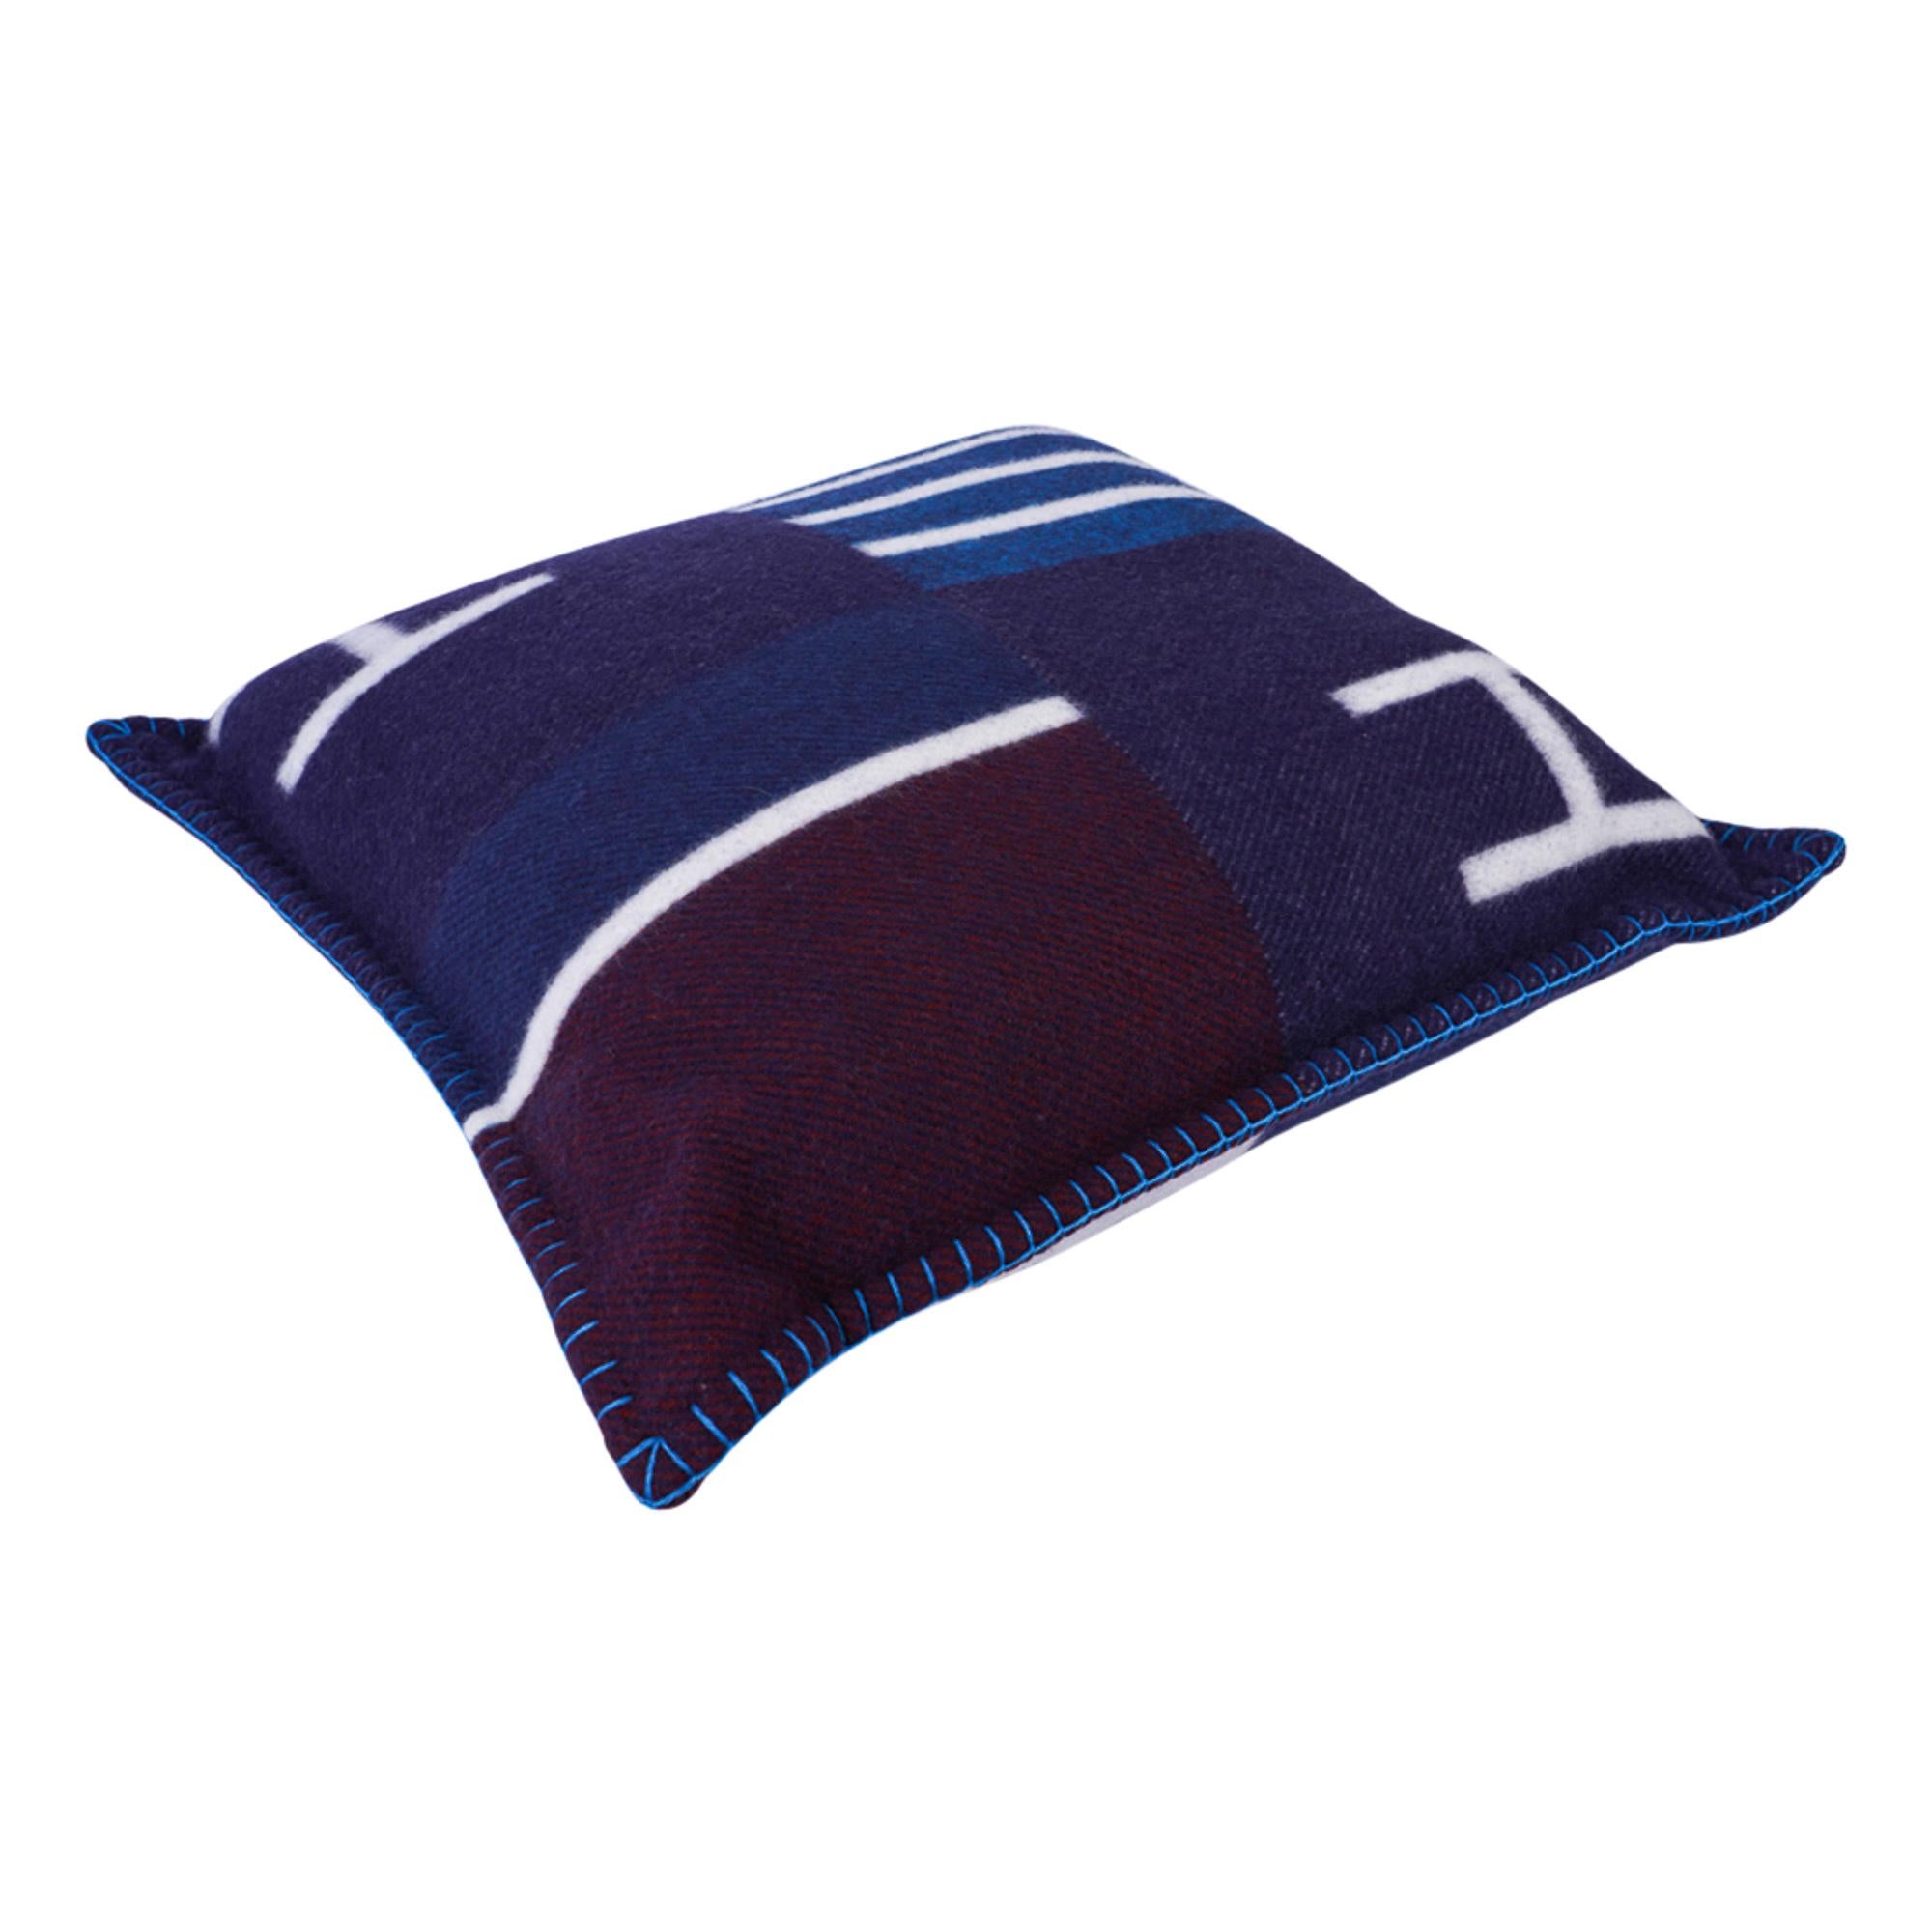 Hermes Cushion Avalon Vibration Blue Marine Small Model Throw Pillow Set of Two 4